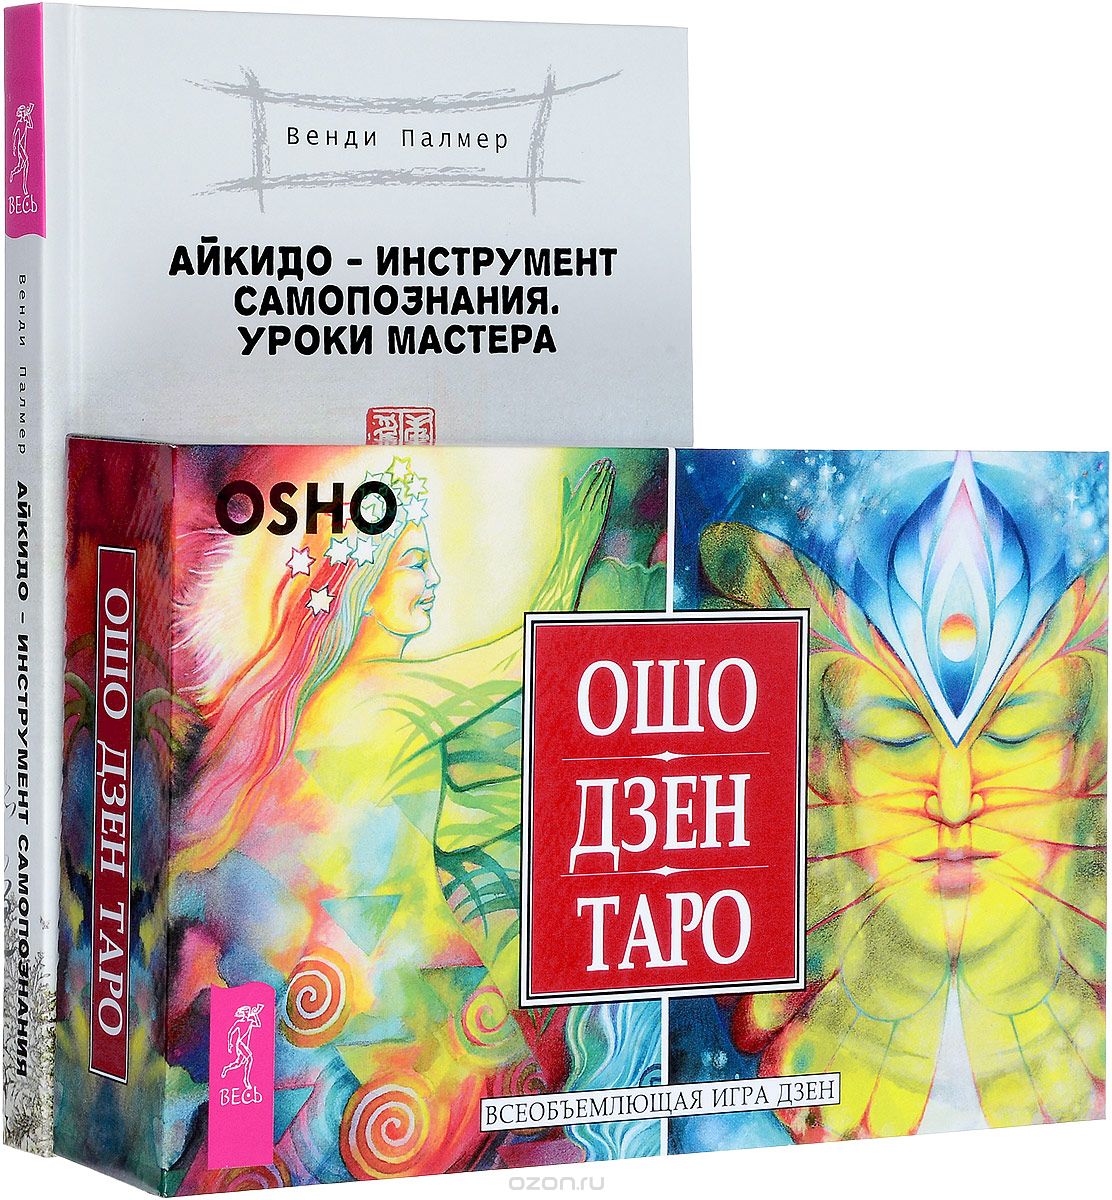 Айкидо - инструмент самопознания. Ошо Дзен Таро (комплект из 2 книг + 79 карт), Венди Палмер, Ошо